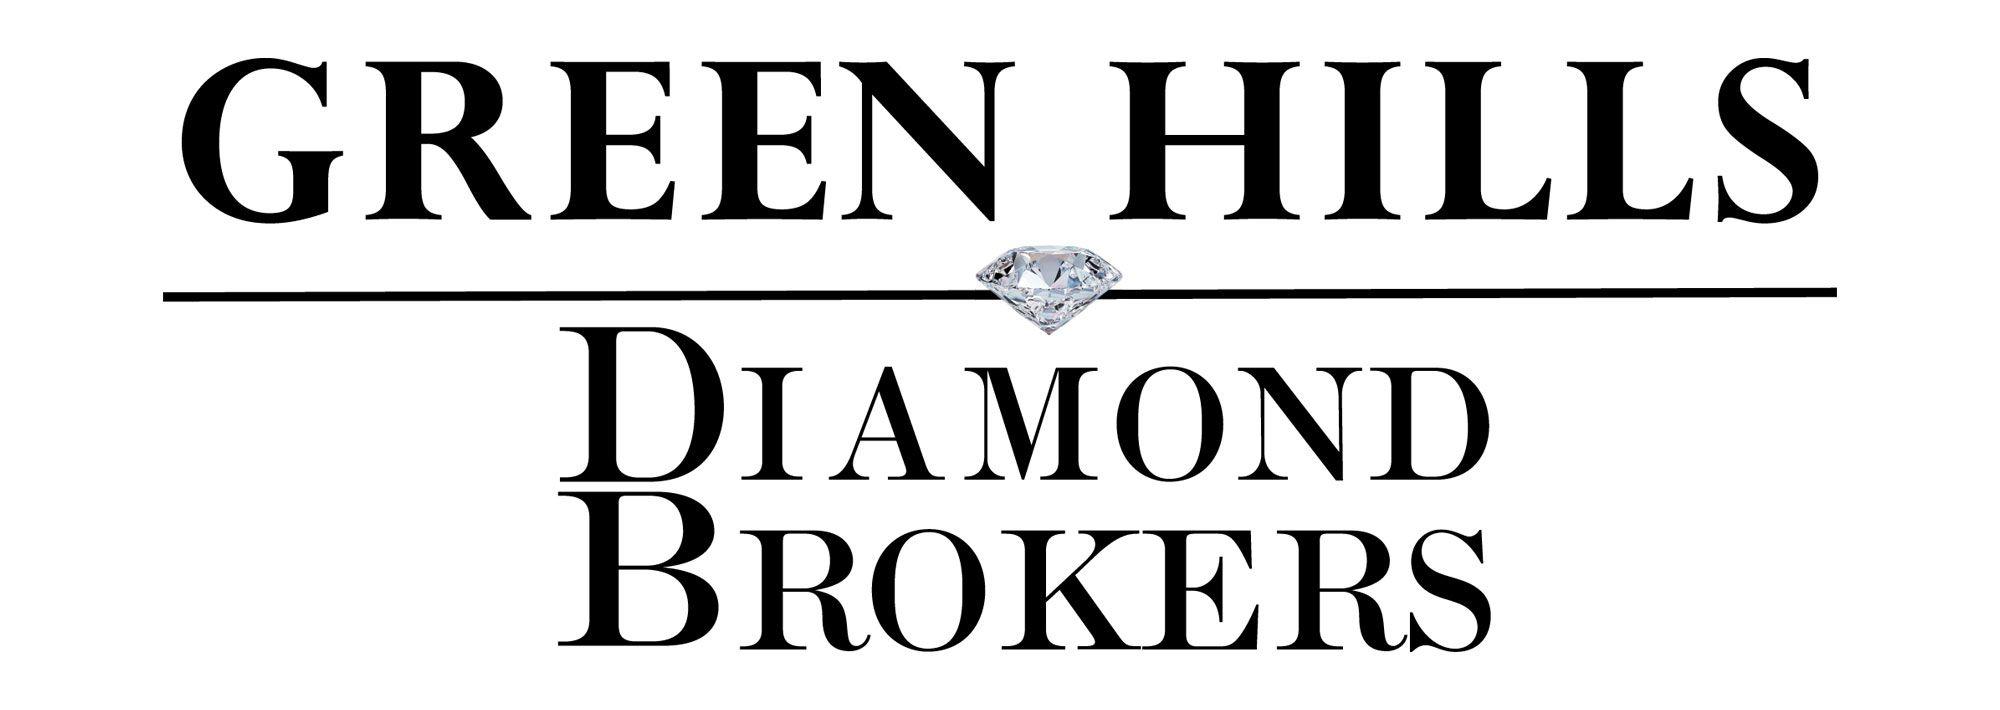 Green and White Diamond Logo - Home - Green Hills Diamond BrokersGreen Hills Diamond Brokers